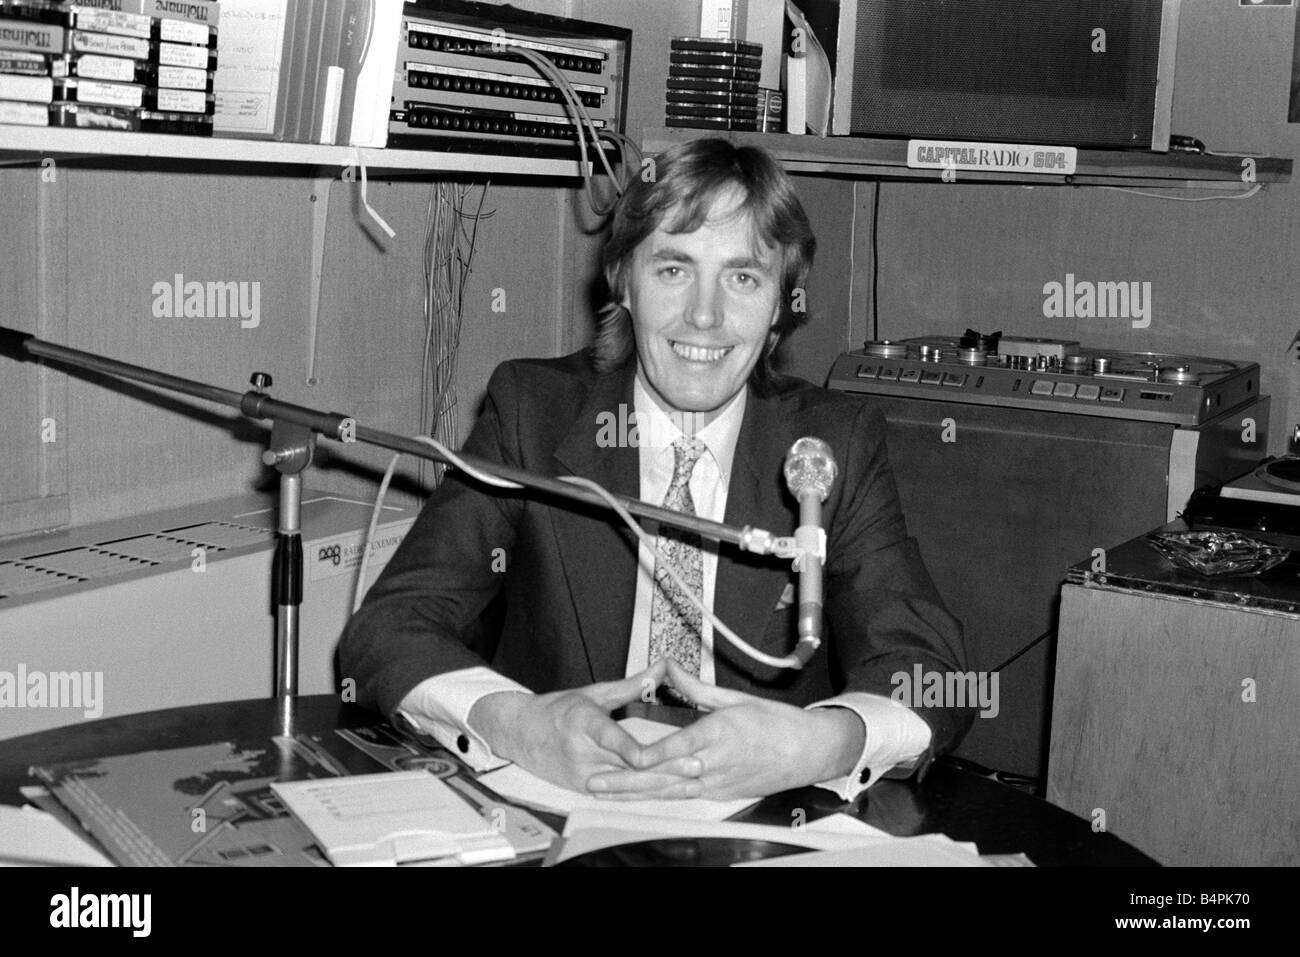 Simon Dee beginnt sein neue Programm mit Radio Luxemburg August 1980  Stockfotografie - Alamy